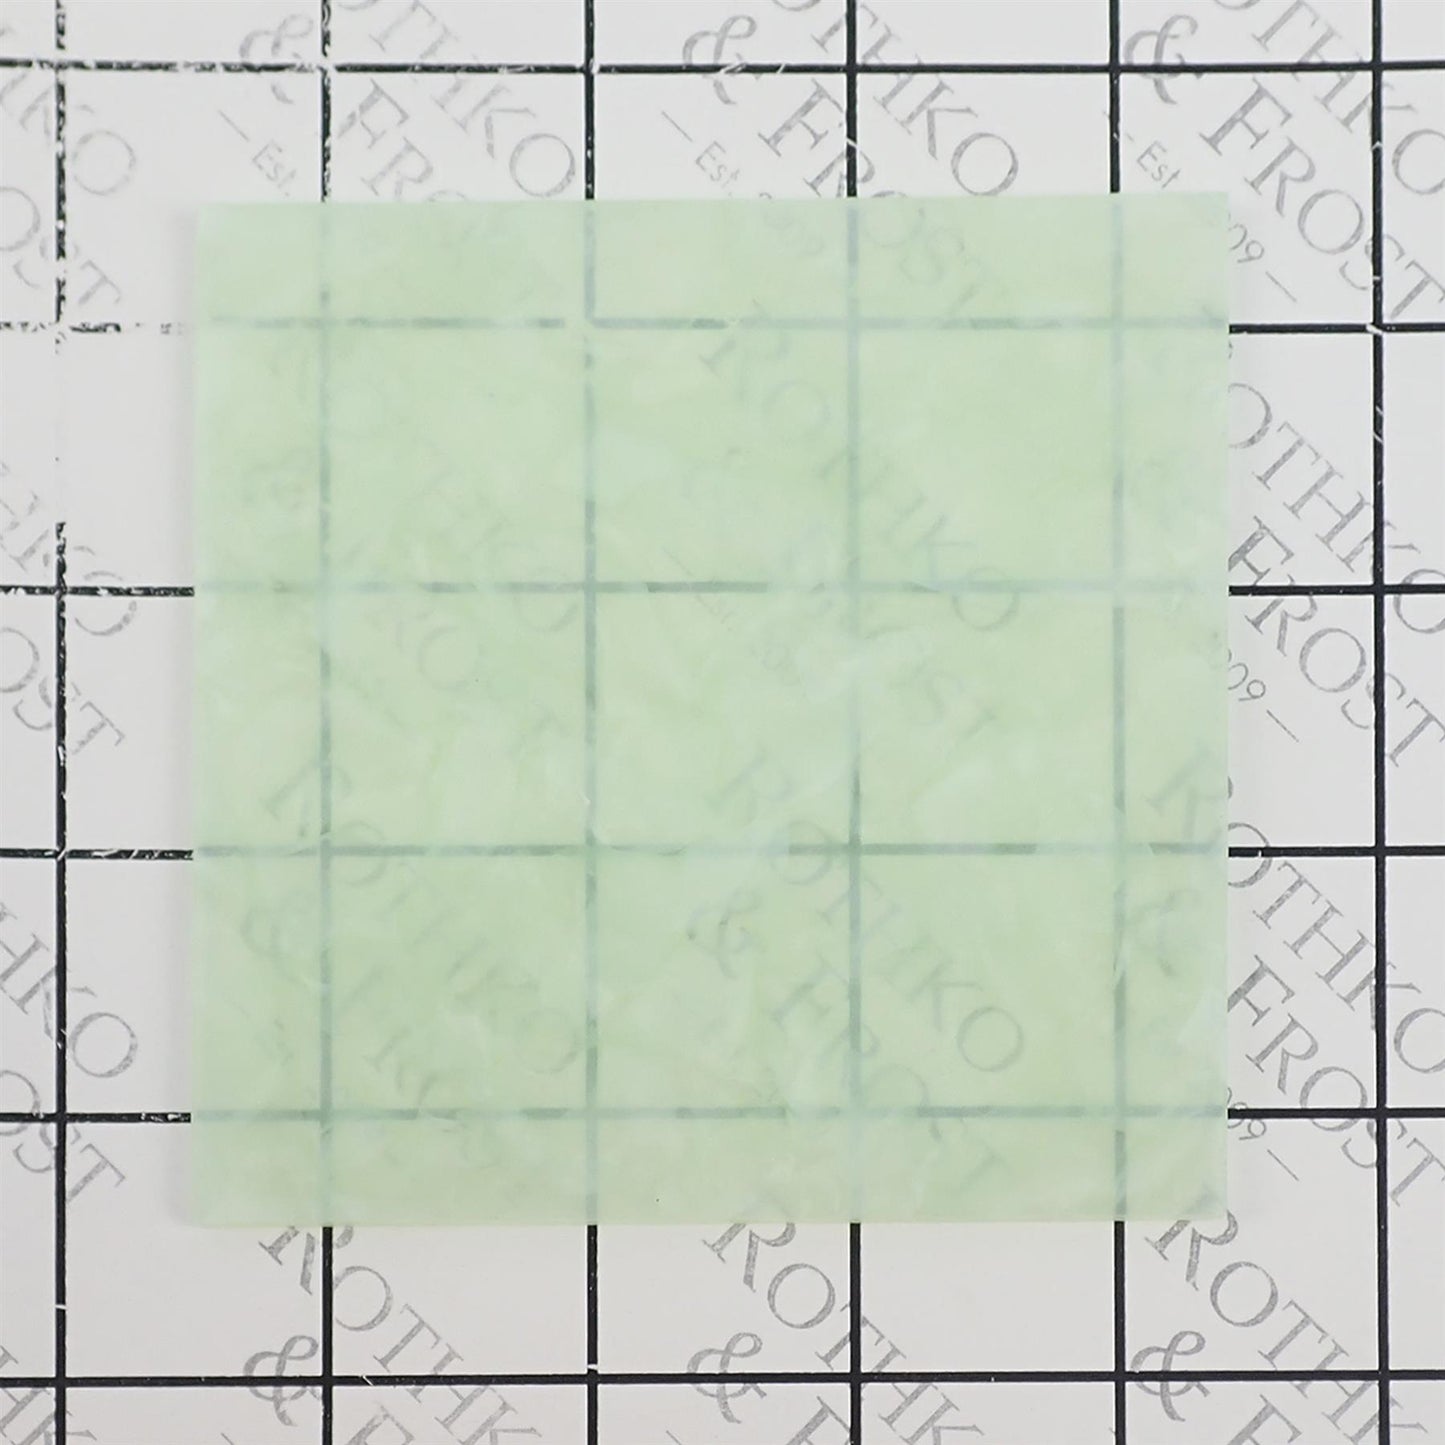 Incudo Regency Green Pearloid Acrylic Sheet - 500x300x3mm